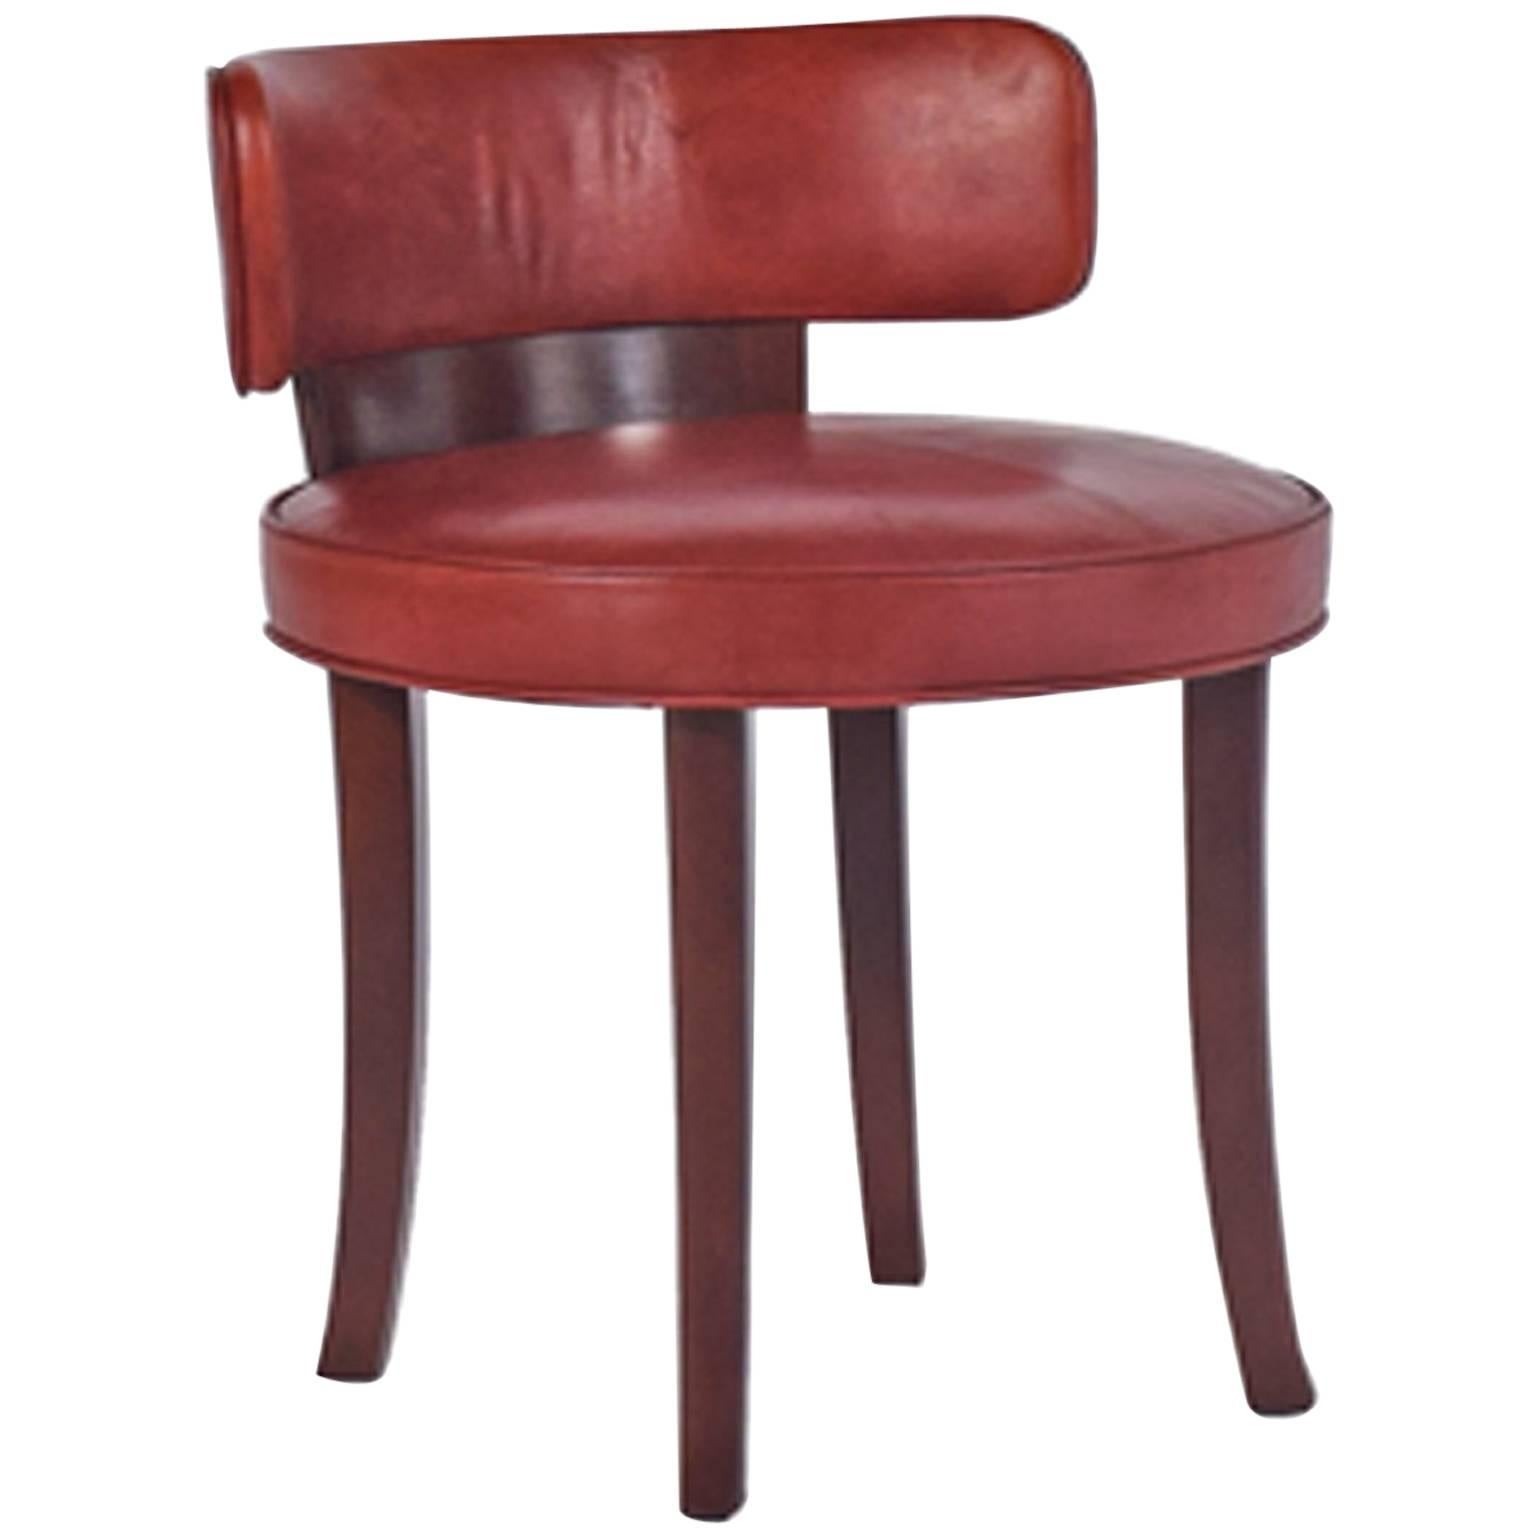 1930s Architect Designed Danish Vanity Chair